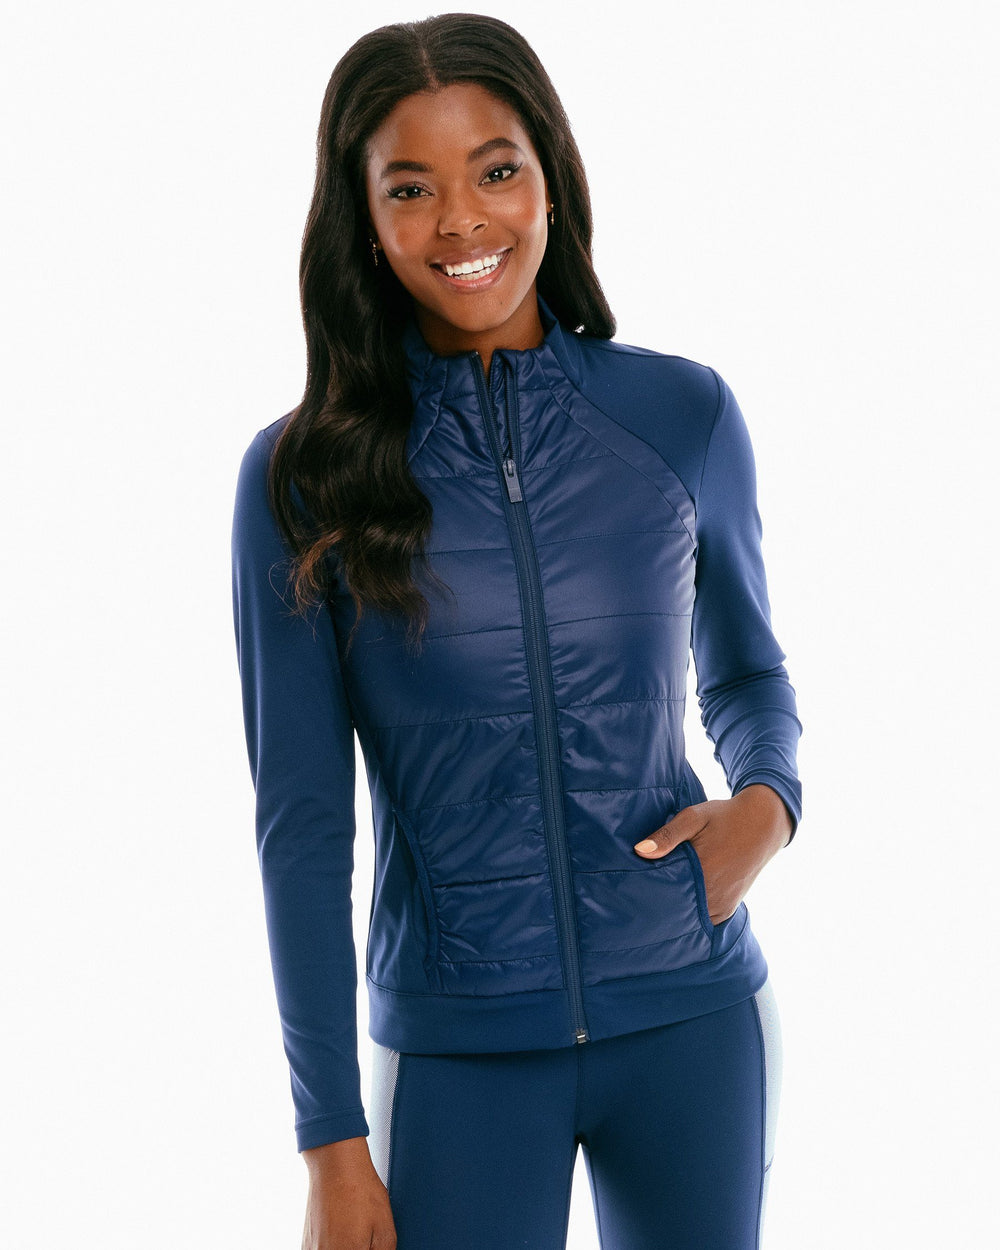 Women's Full Zip Performance Athletic Jacket